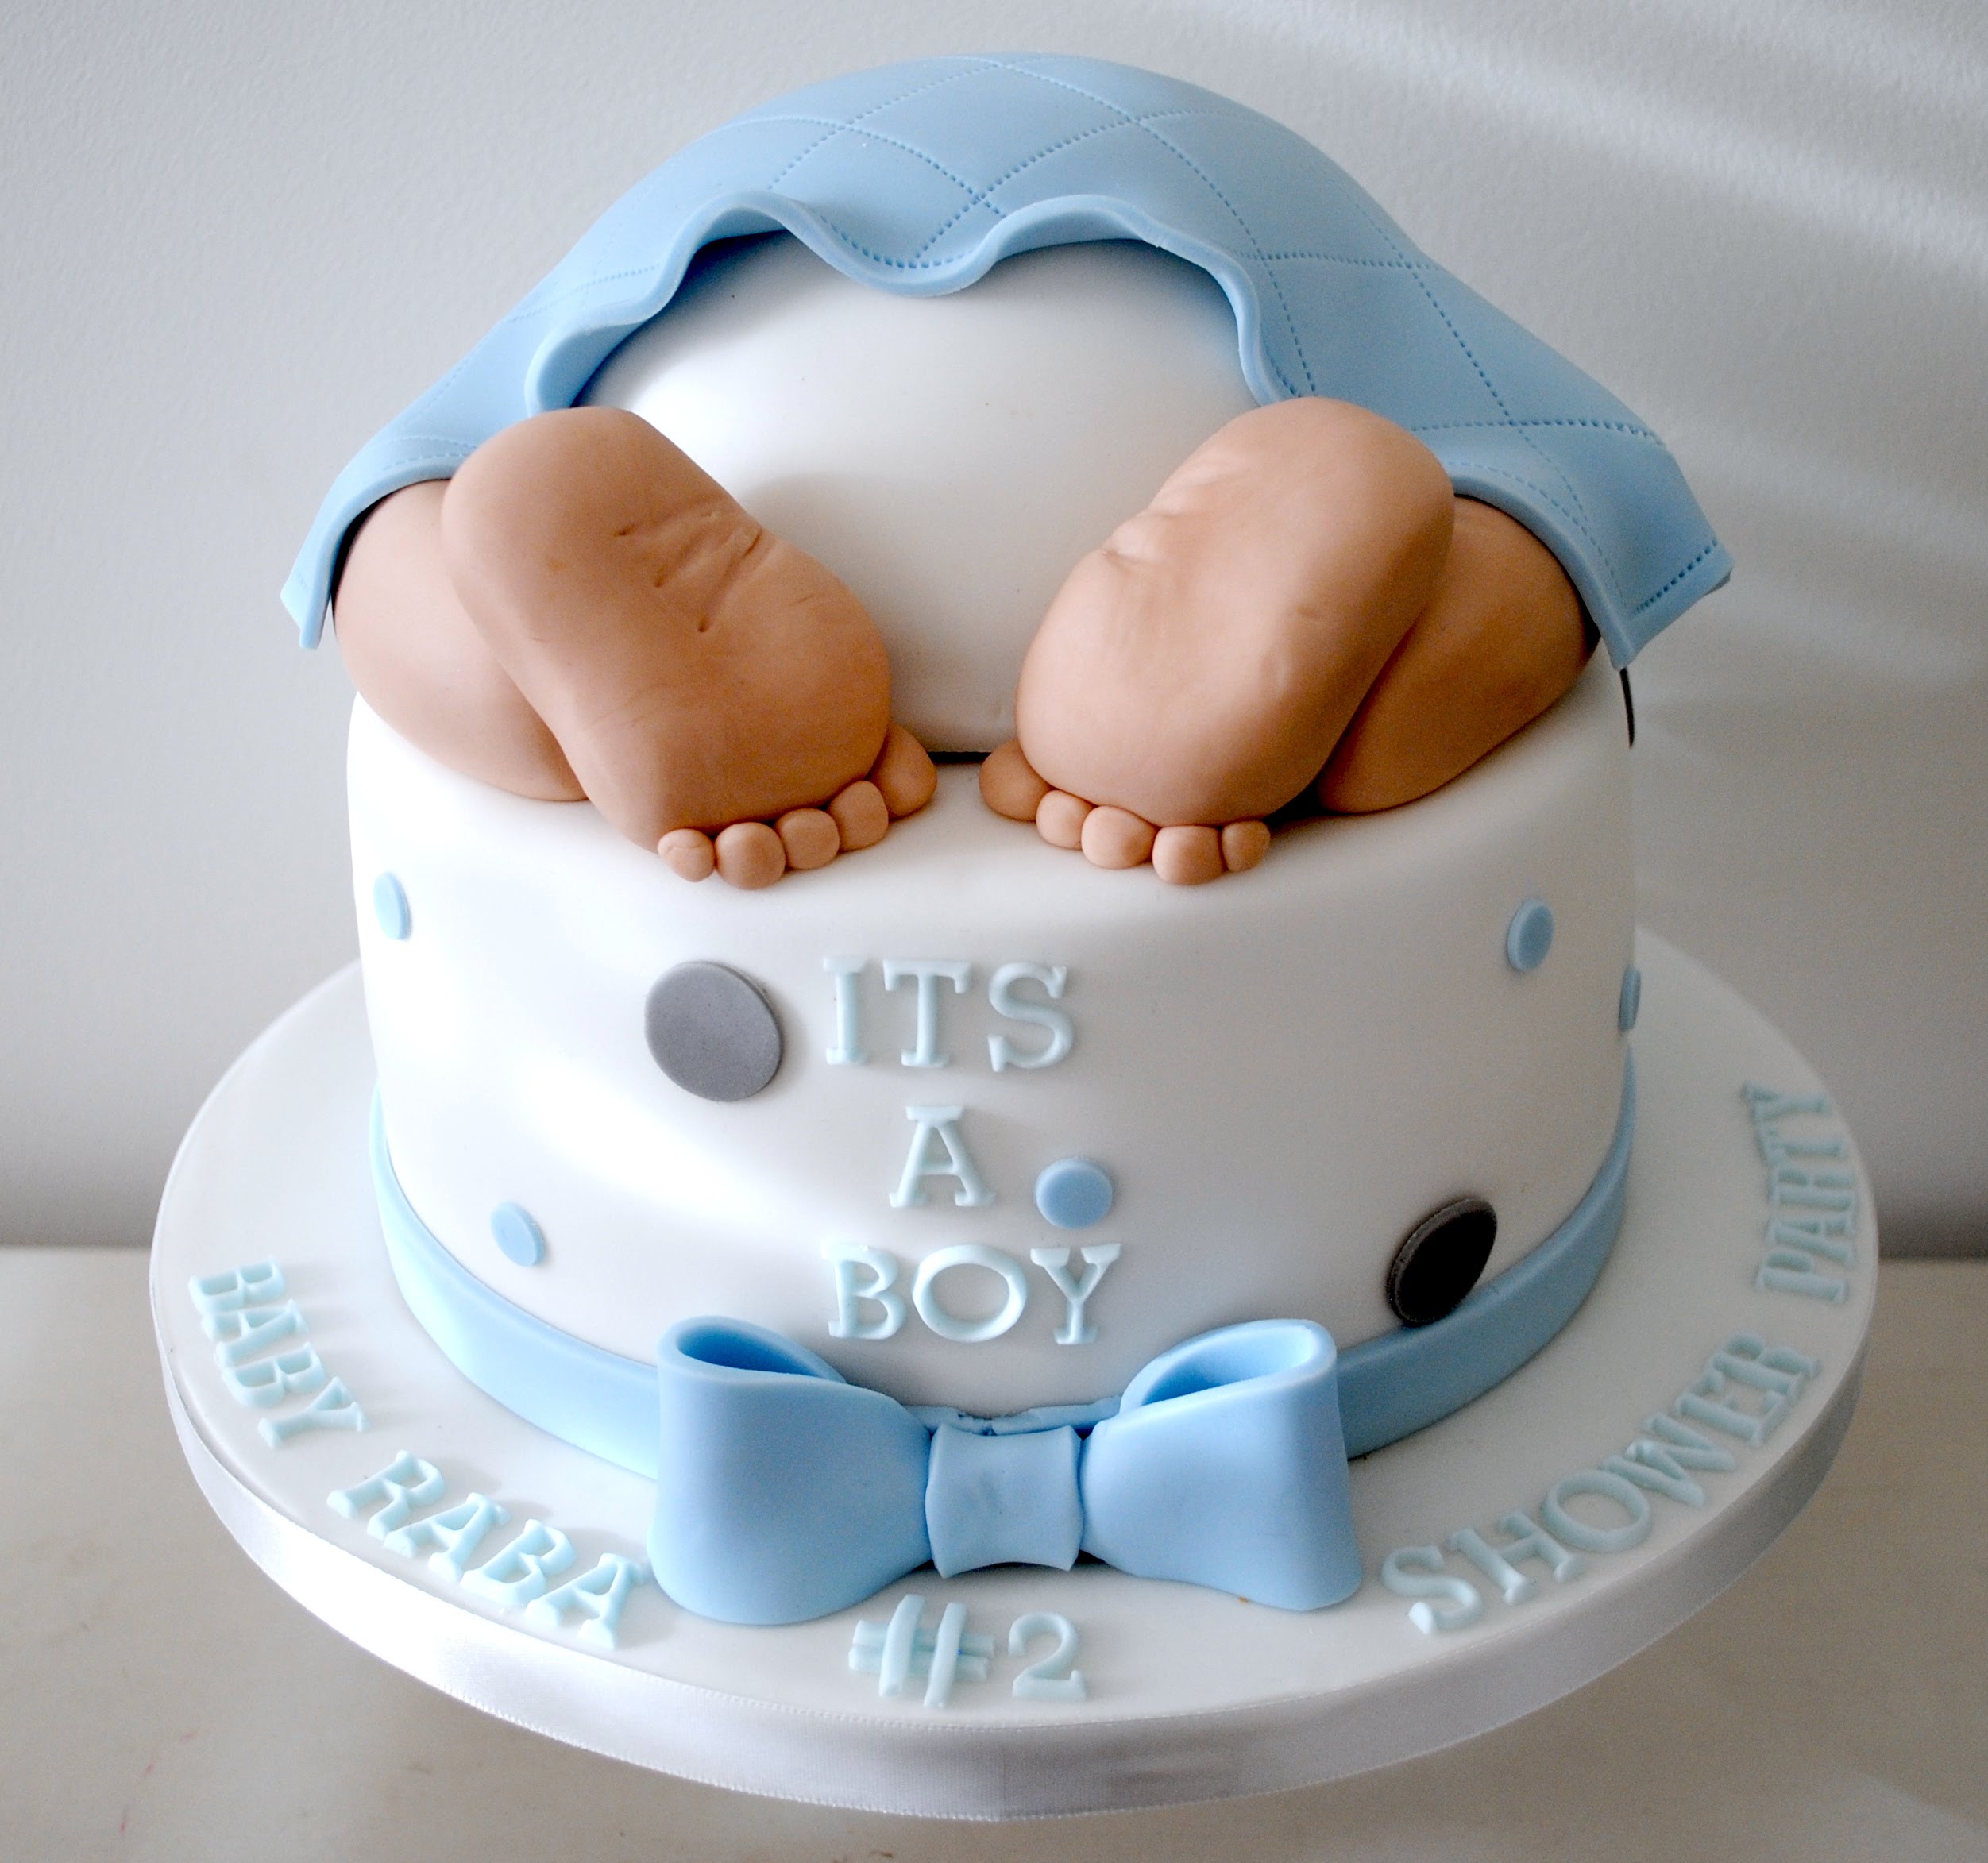 designer cakes for new born baby, order cakes for baby shower, fondant cakes order for baby shower.